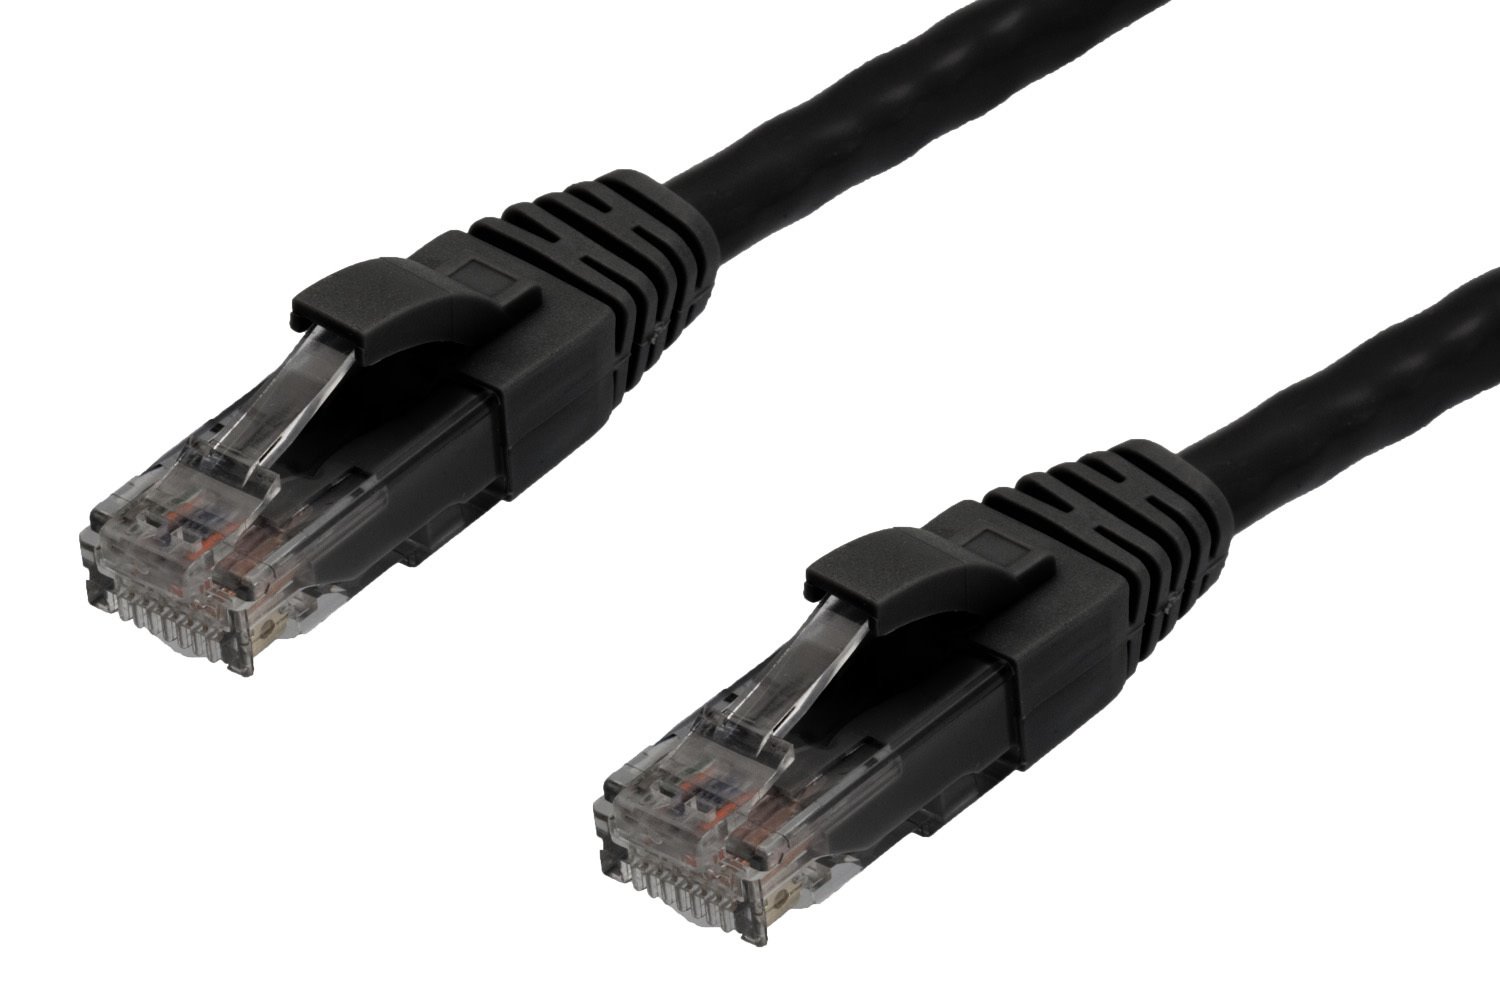 4Cabling 2M RJ45 Cat6 Ethernet Cable. Black